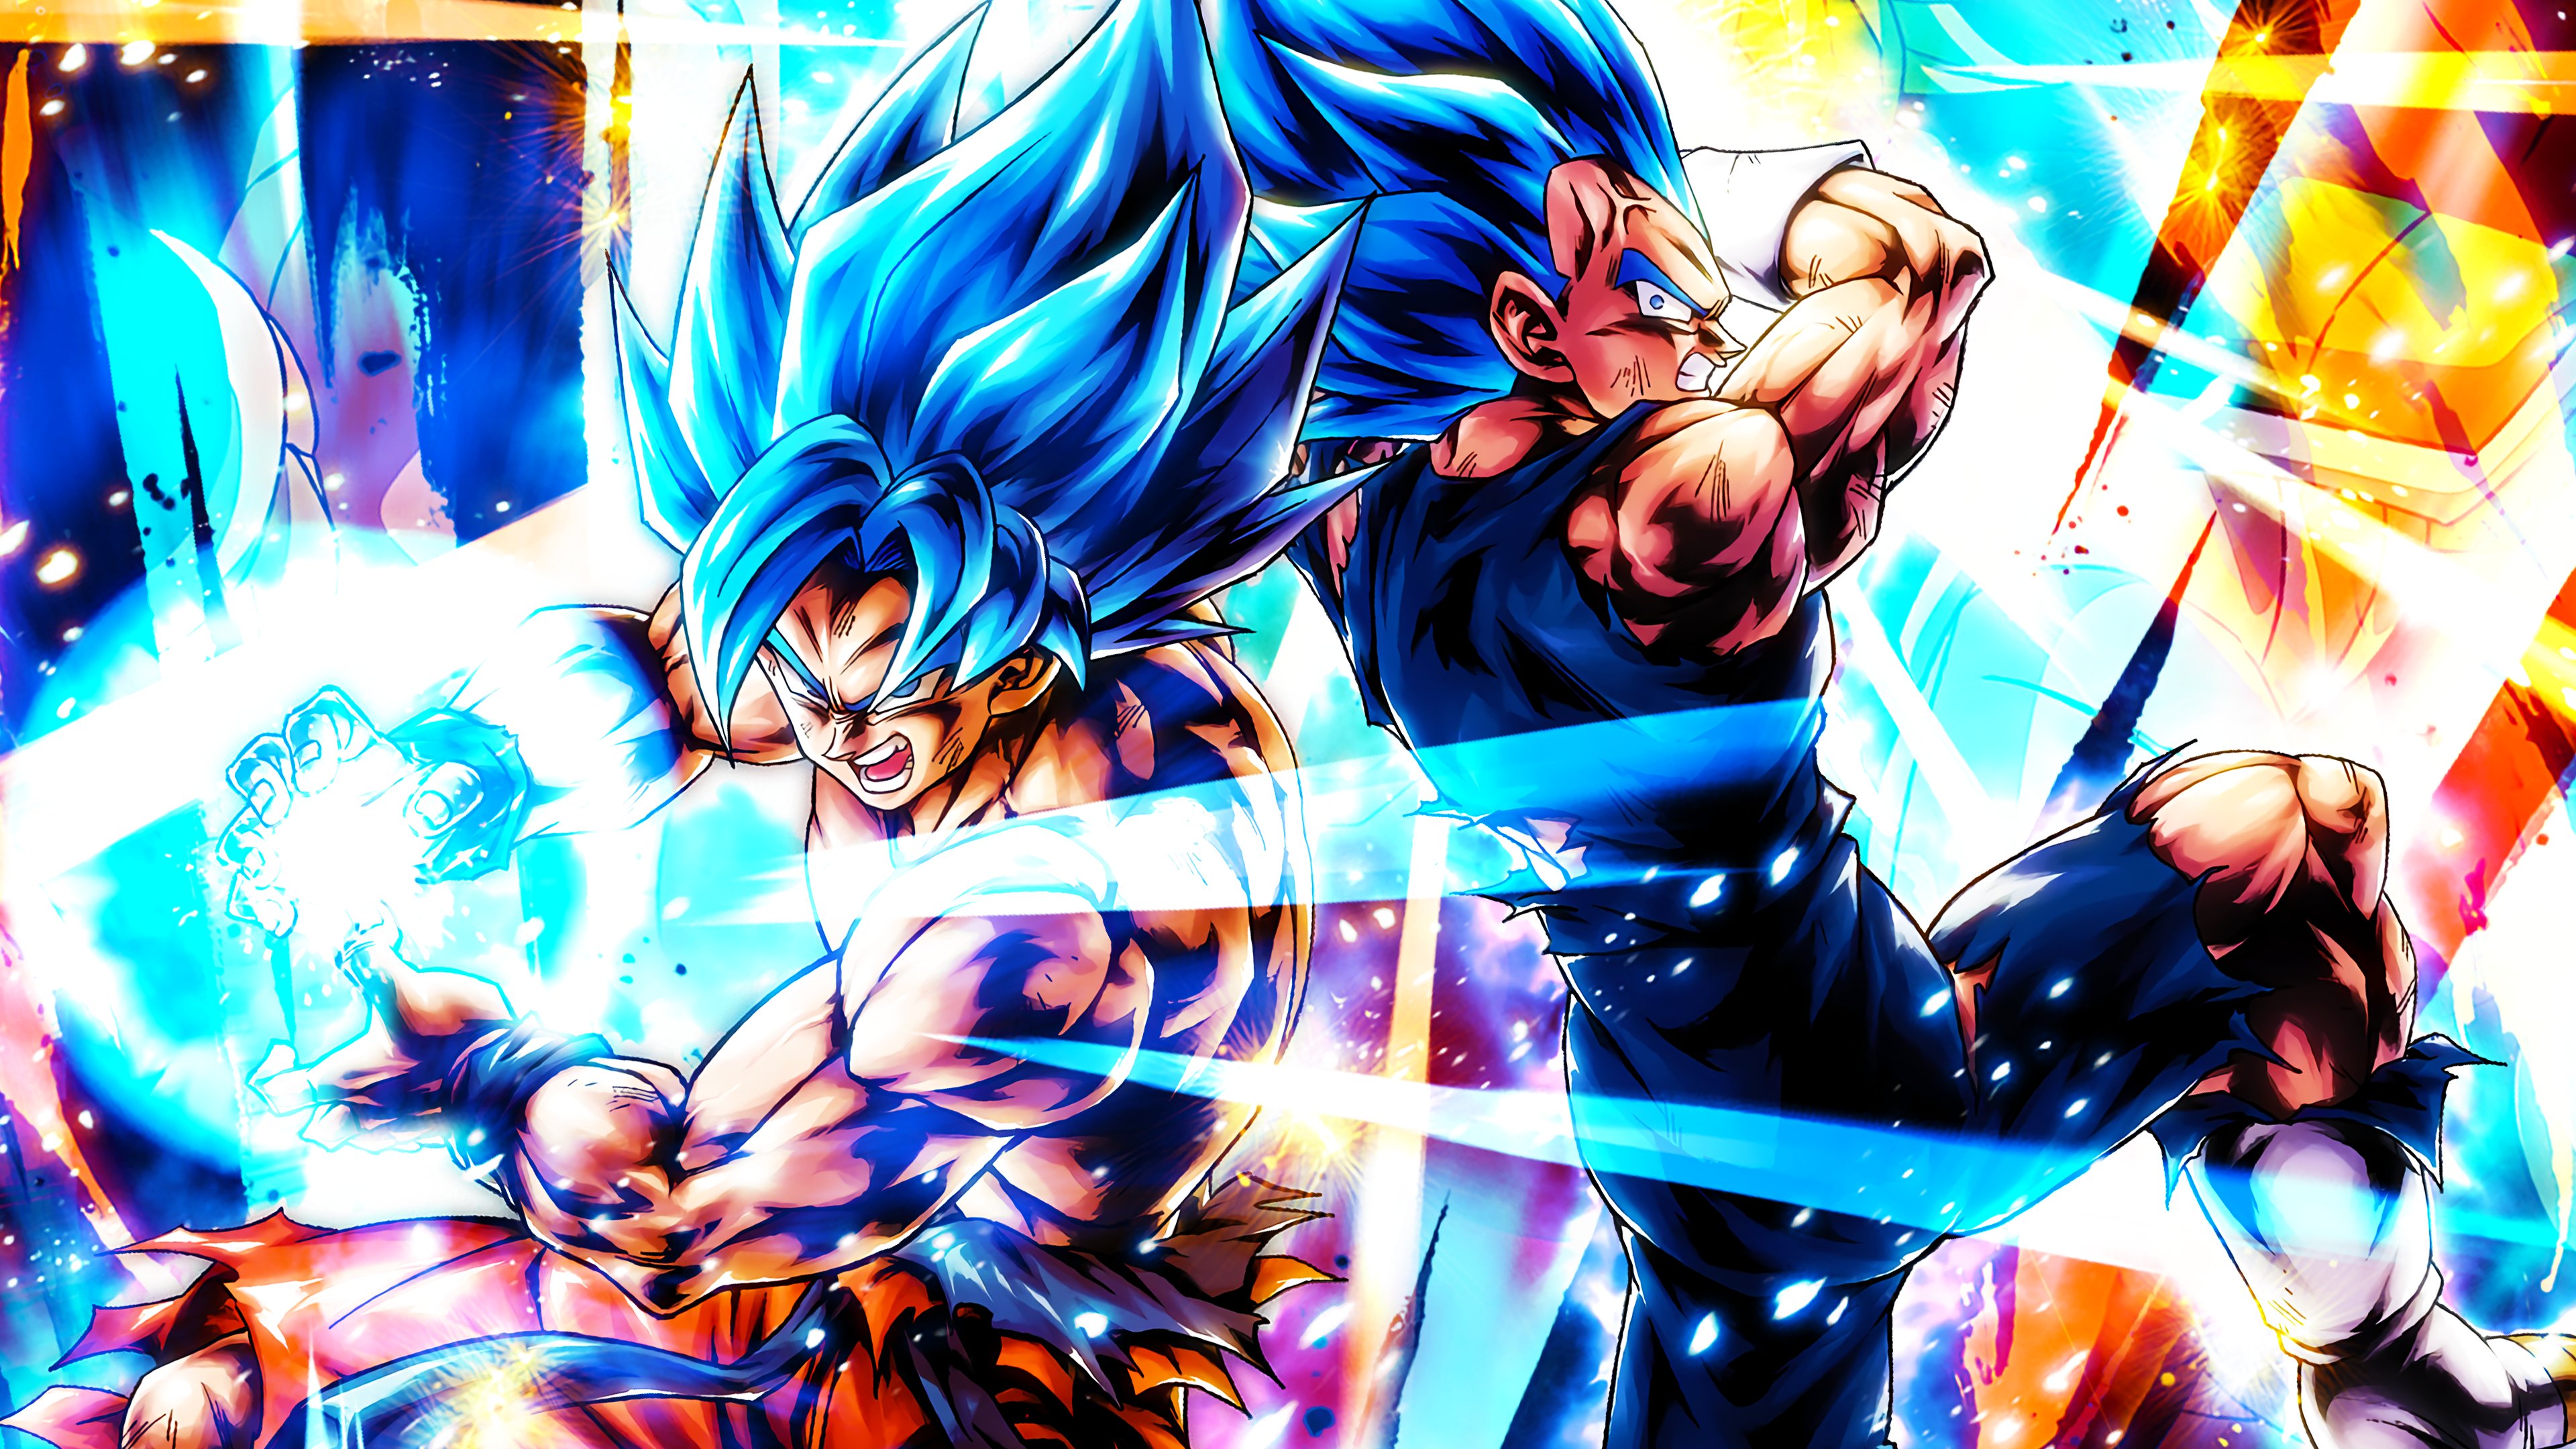 Goku vs Vegeta Live wallpaperAmazoncomAppstore for Android